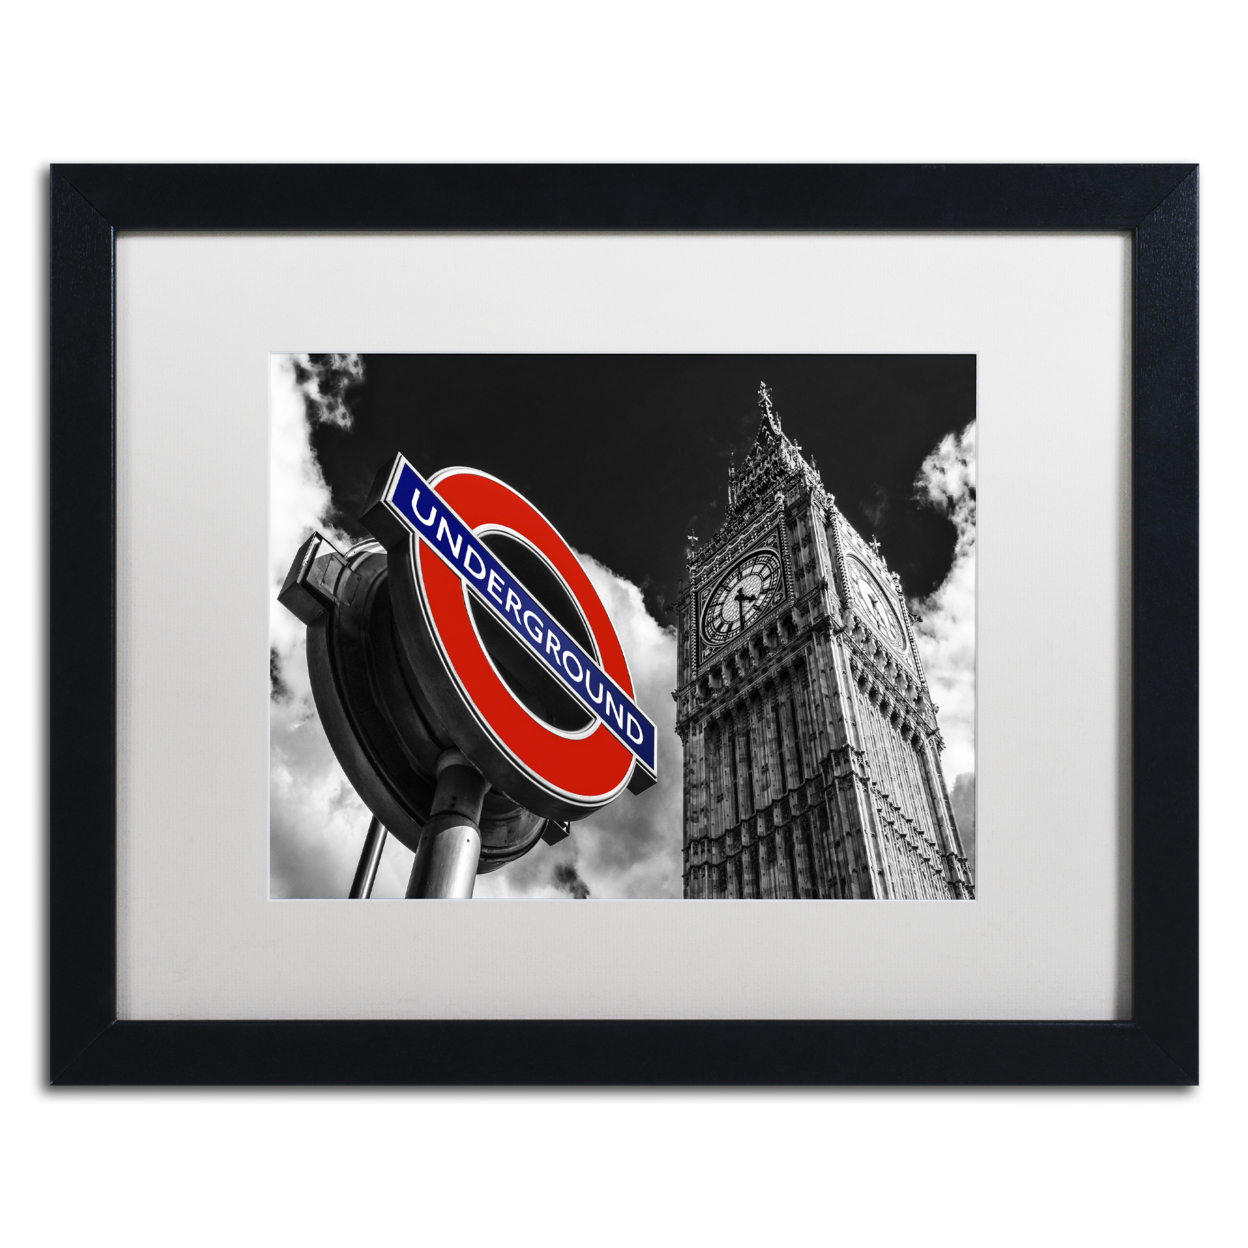 Philippe Hugonnard 'Underground London' Black Wooden Framed Art 18 X 22 Inches